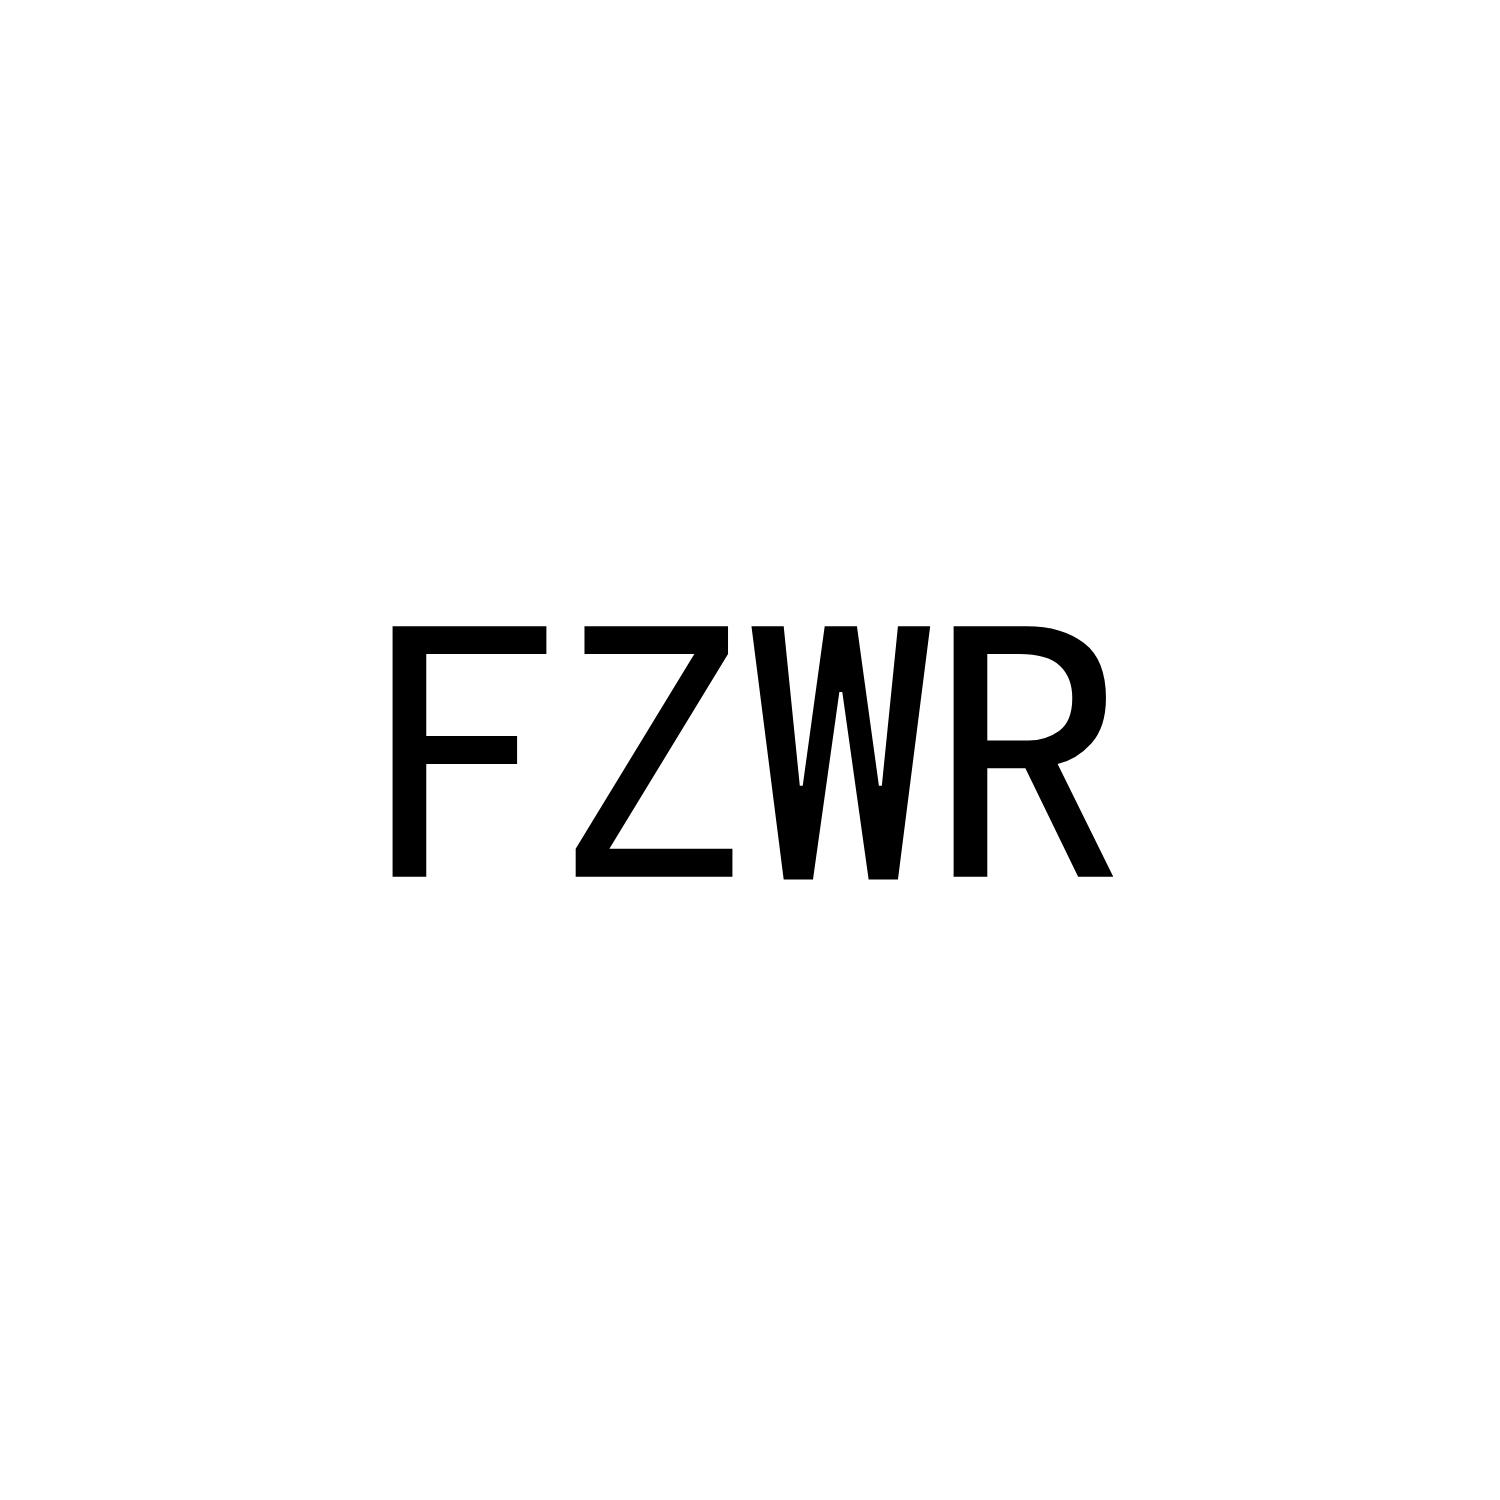 FZWR